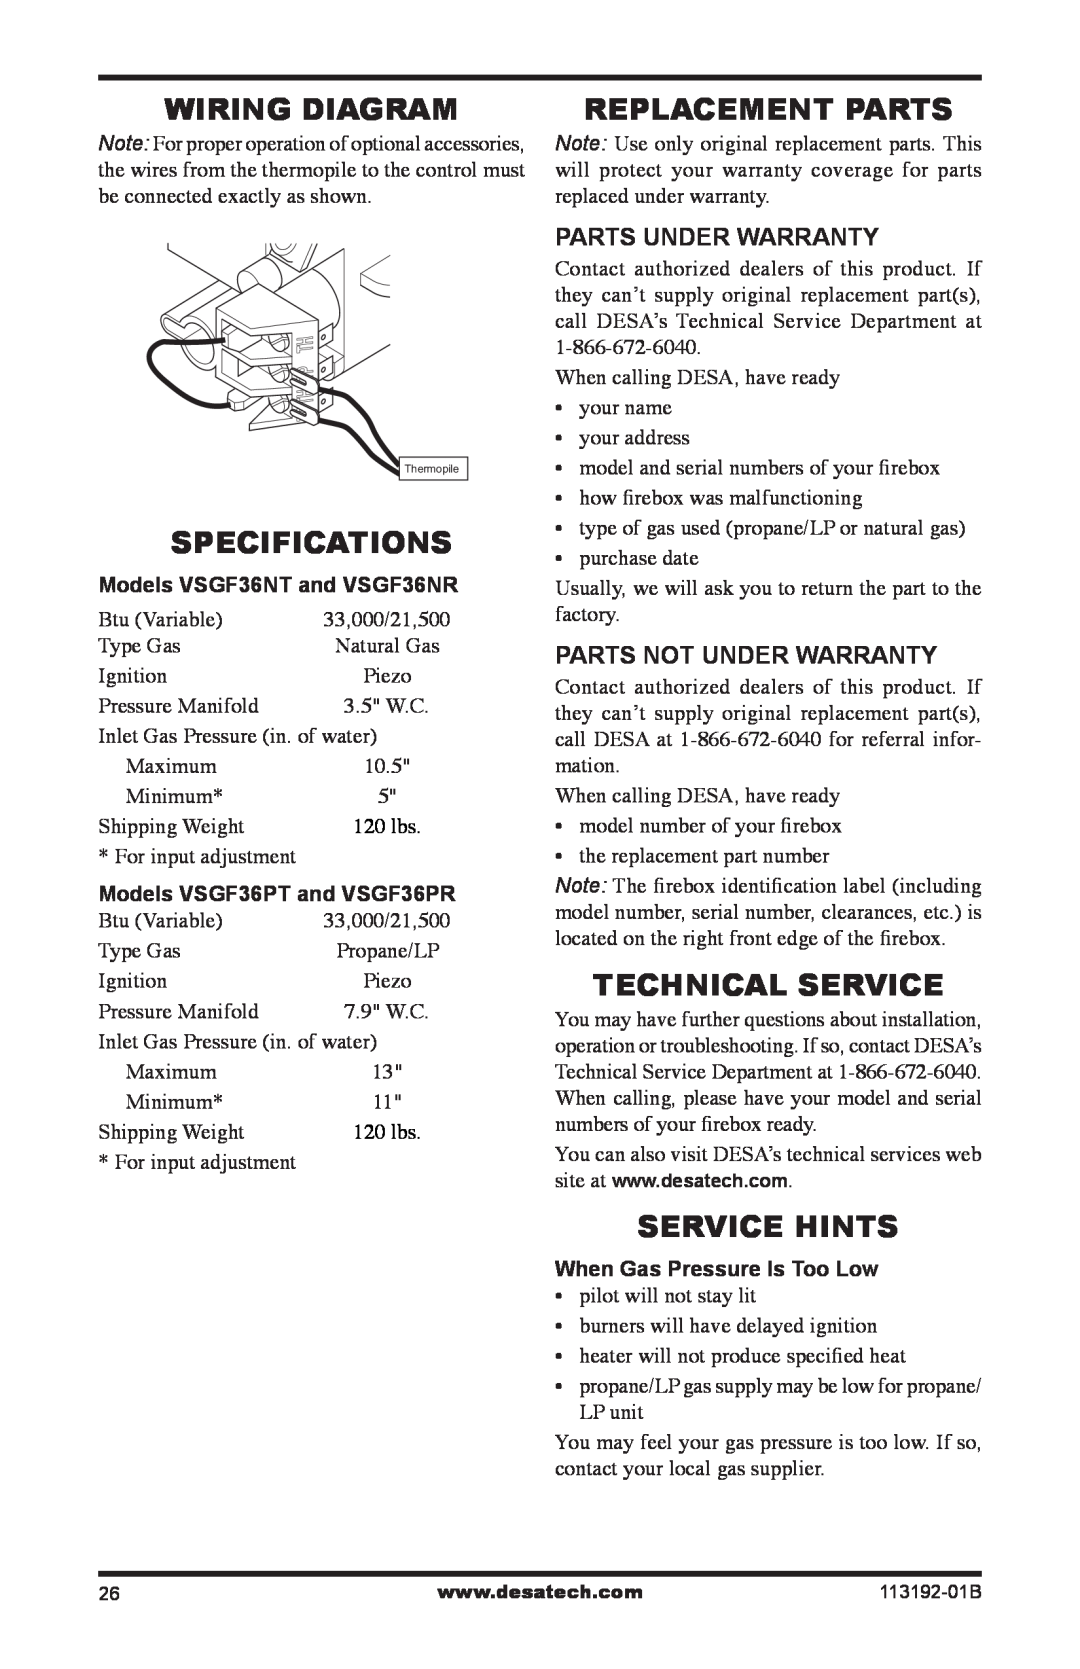 Desa VSGF36PR Wiring Diagram, Replacement Parts, Specifications, Technical Service, Service Hints, Parts Under Warranty 